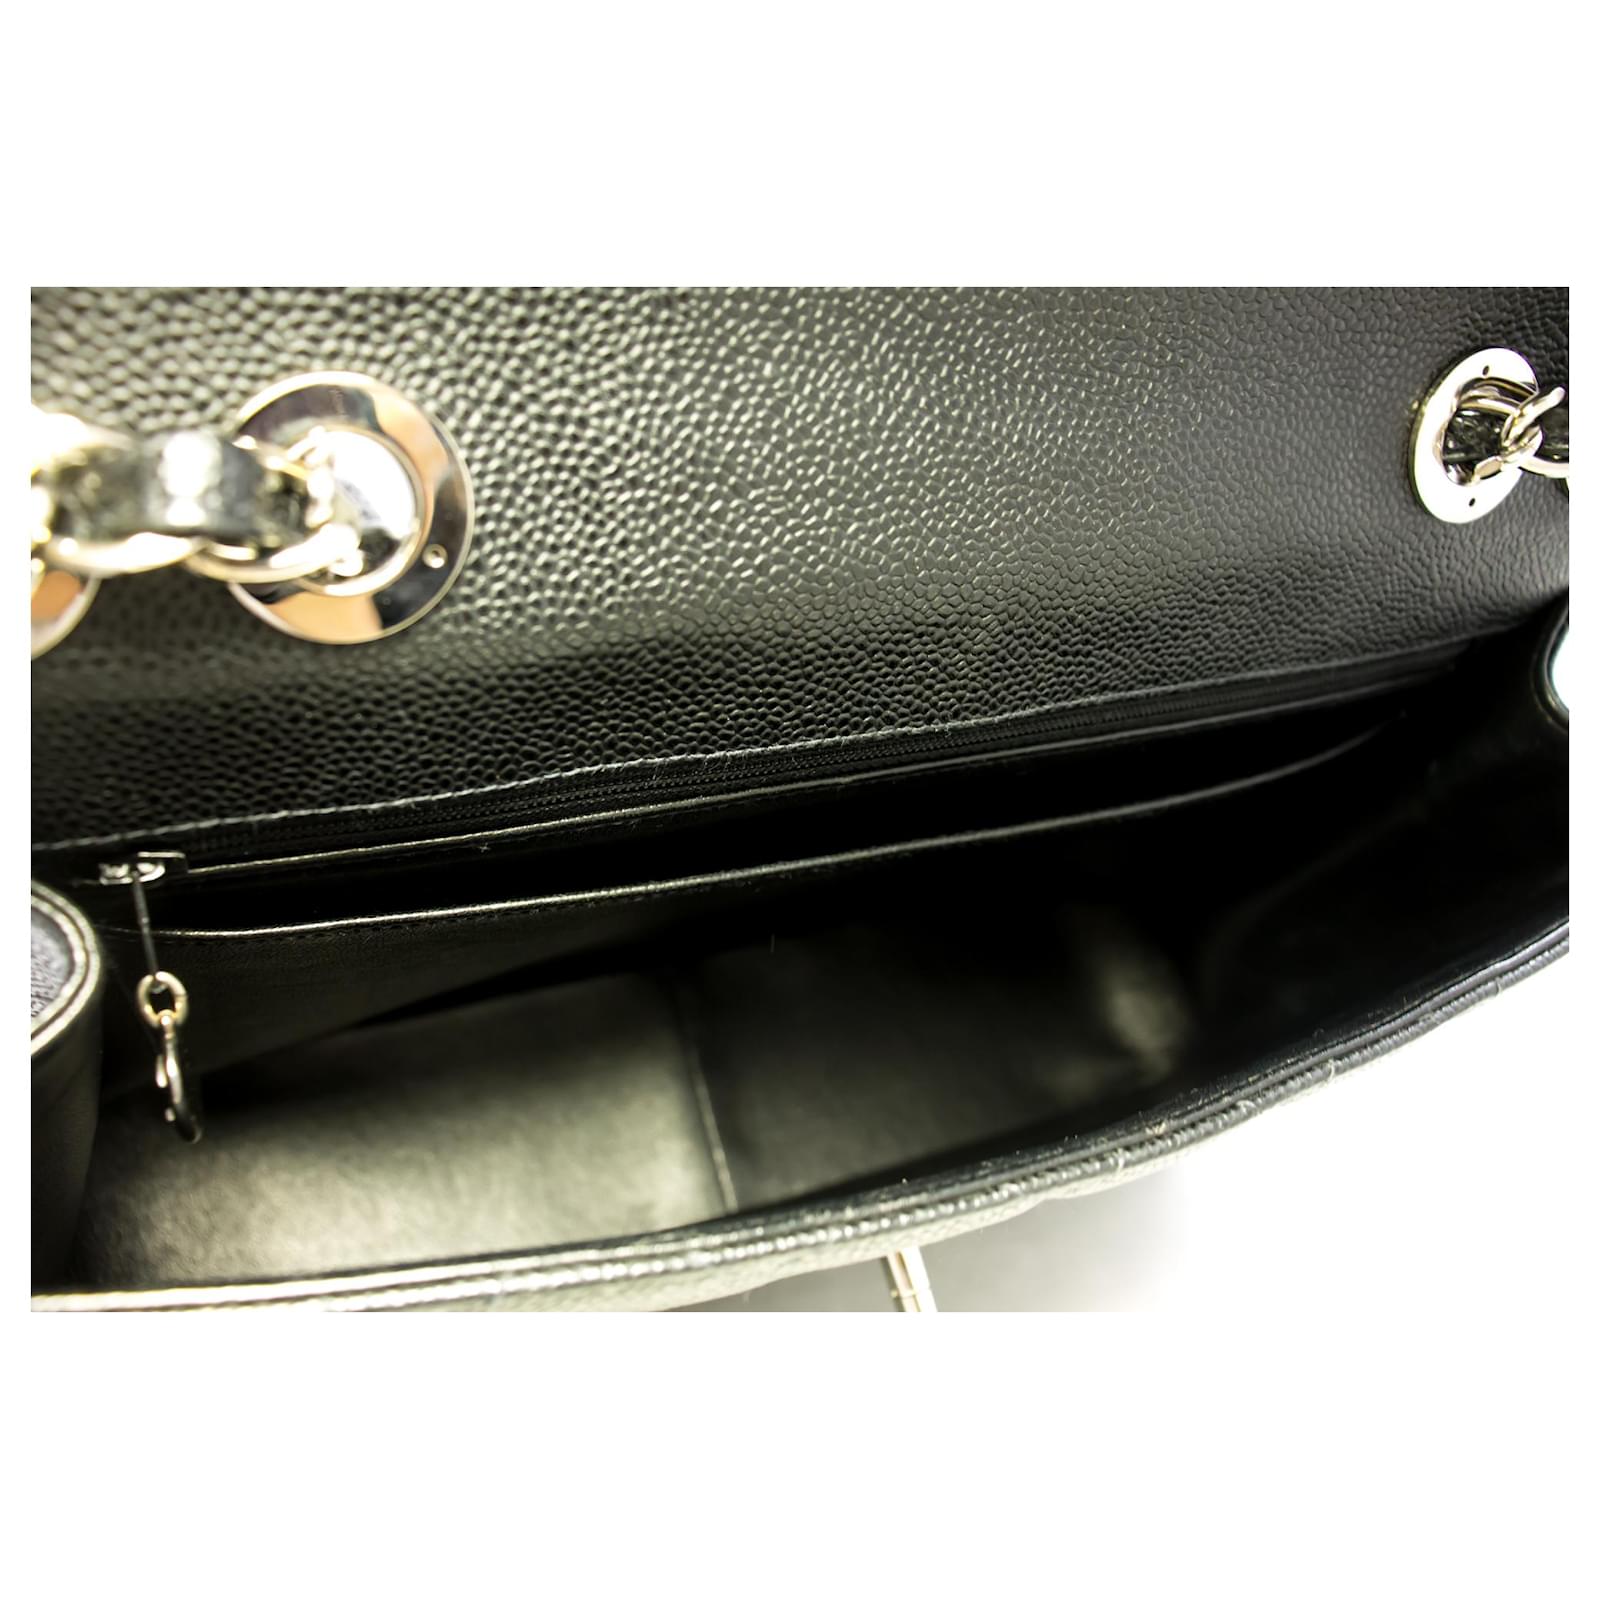 CHANEL Large Classic Handbag Chain Shoulder Bag Flap Black